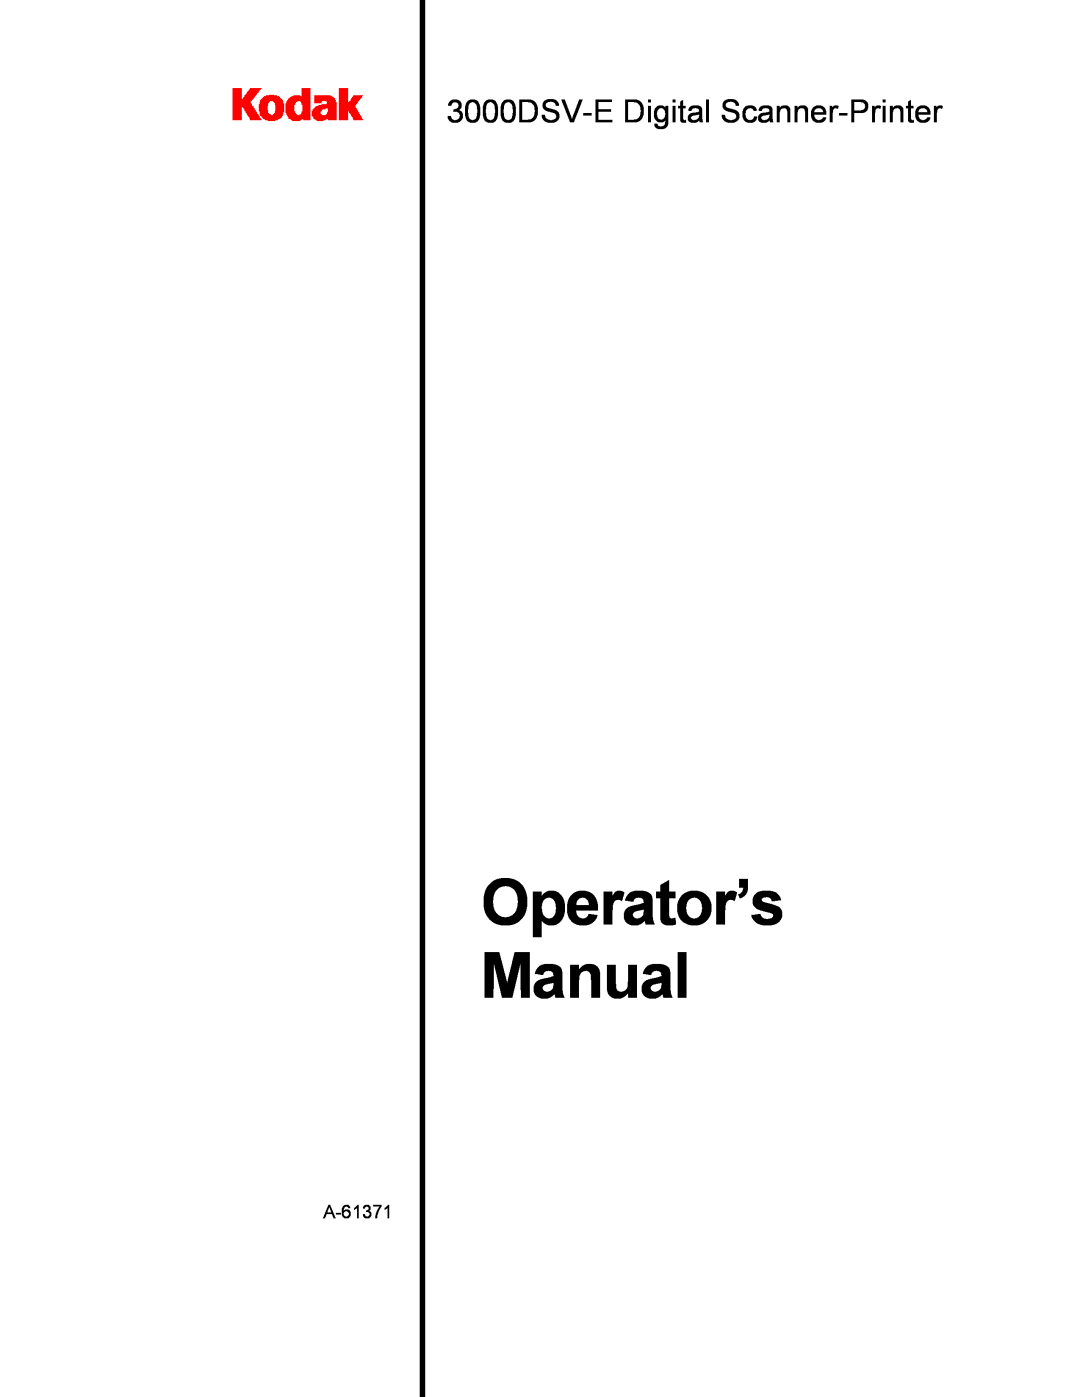 Kodak manual Operator’s Manual, 3000DSV-E Digital Scanner-Printer, A-61371 